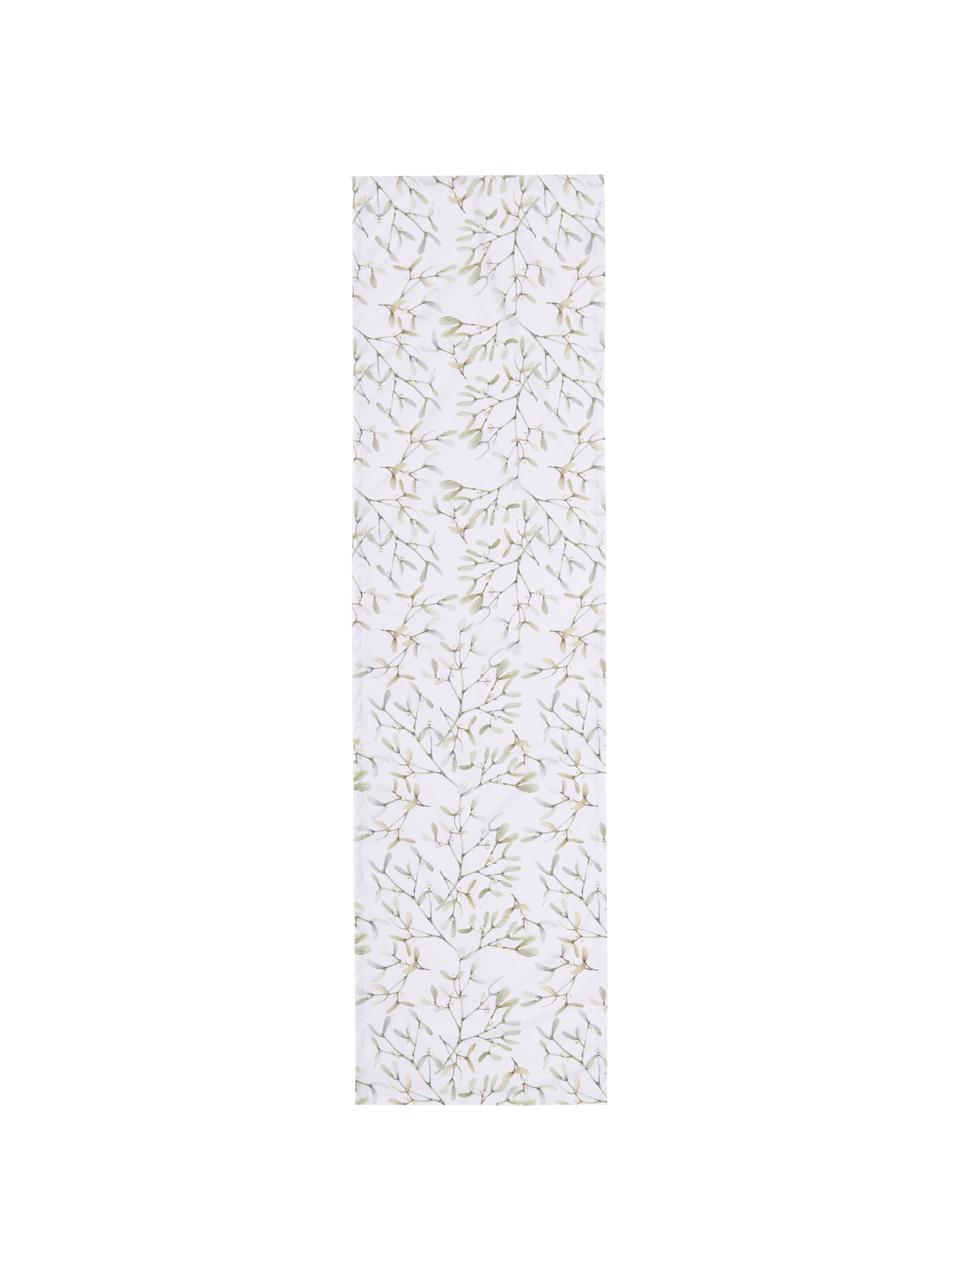 Tafelloper Fairytale met maretak patroon, 100% polyester, Wit, groentinten, B 40 x L 145 cm